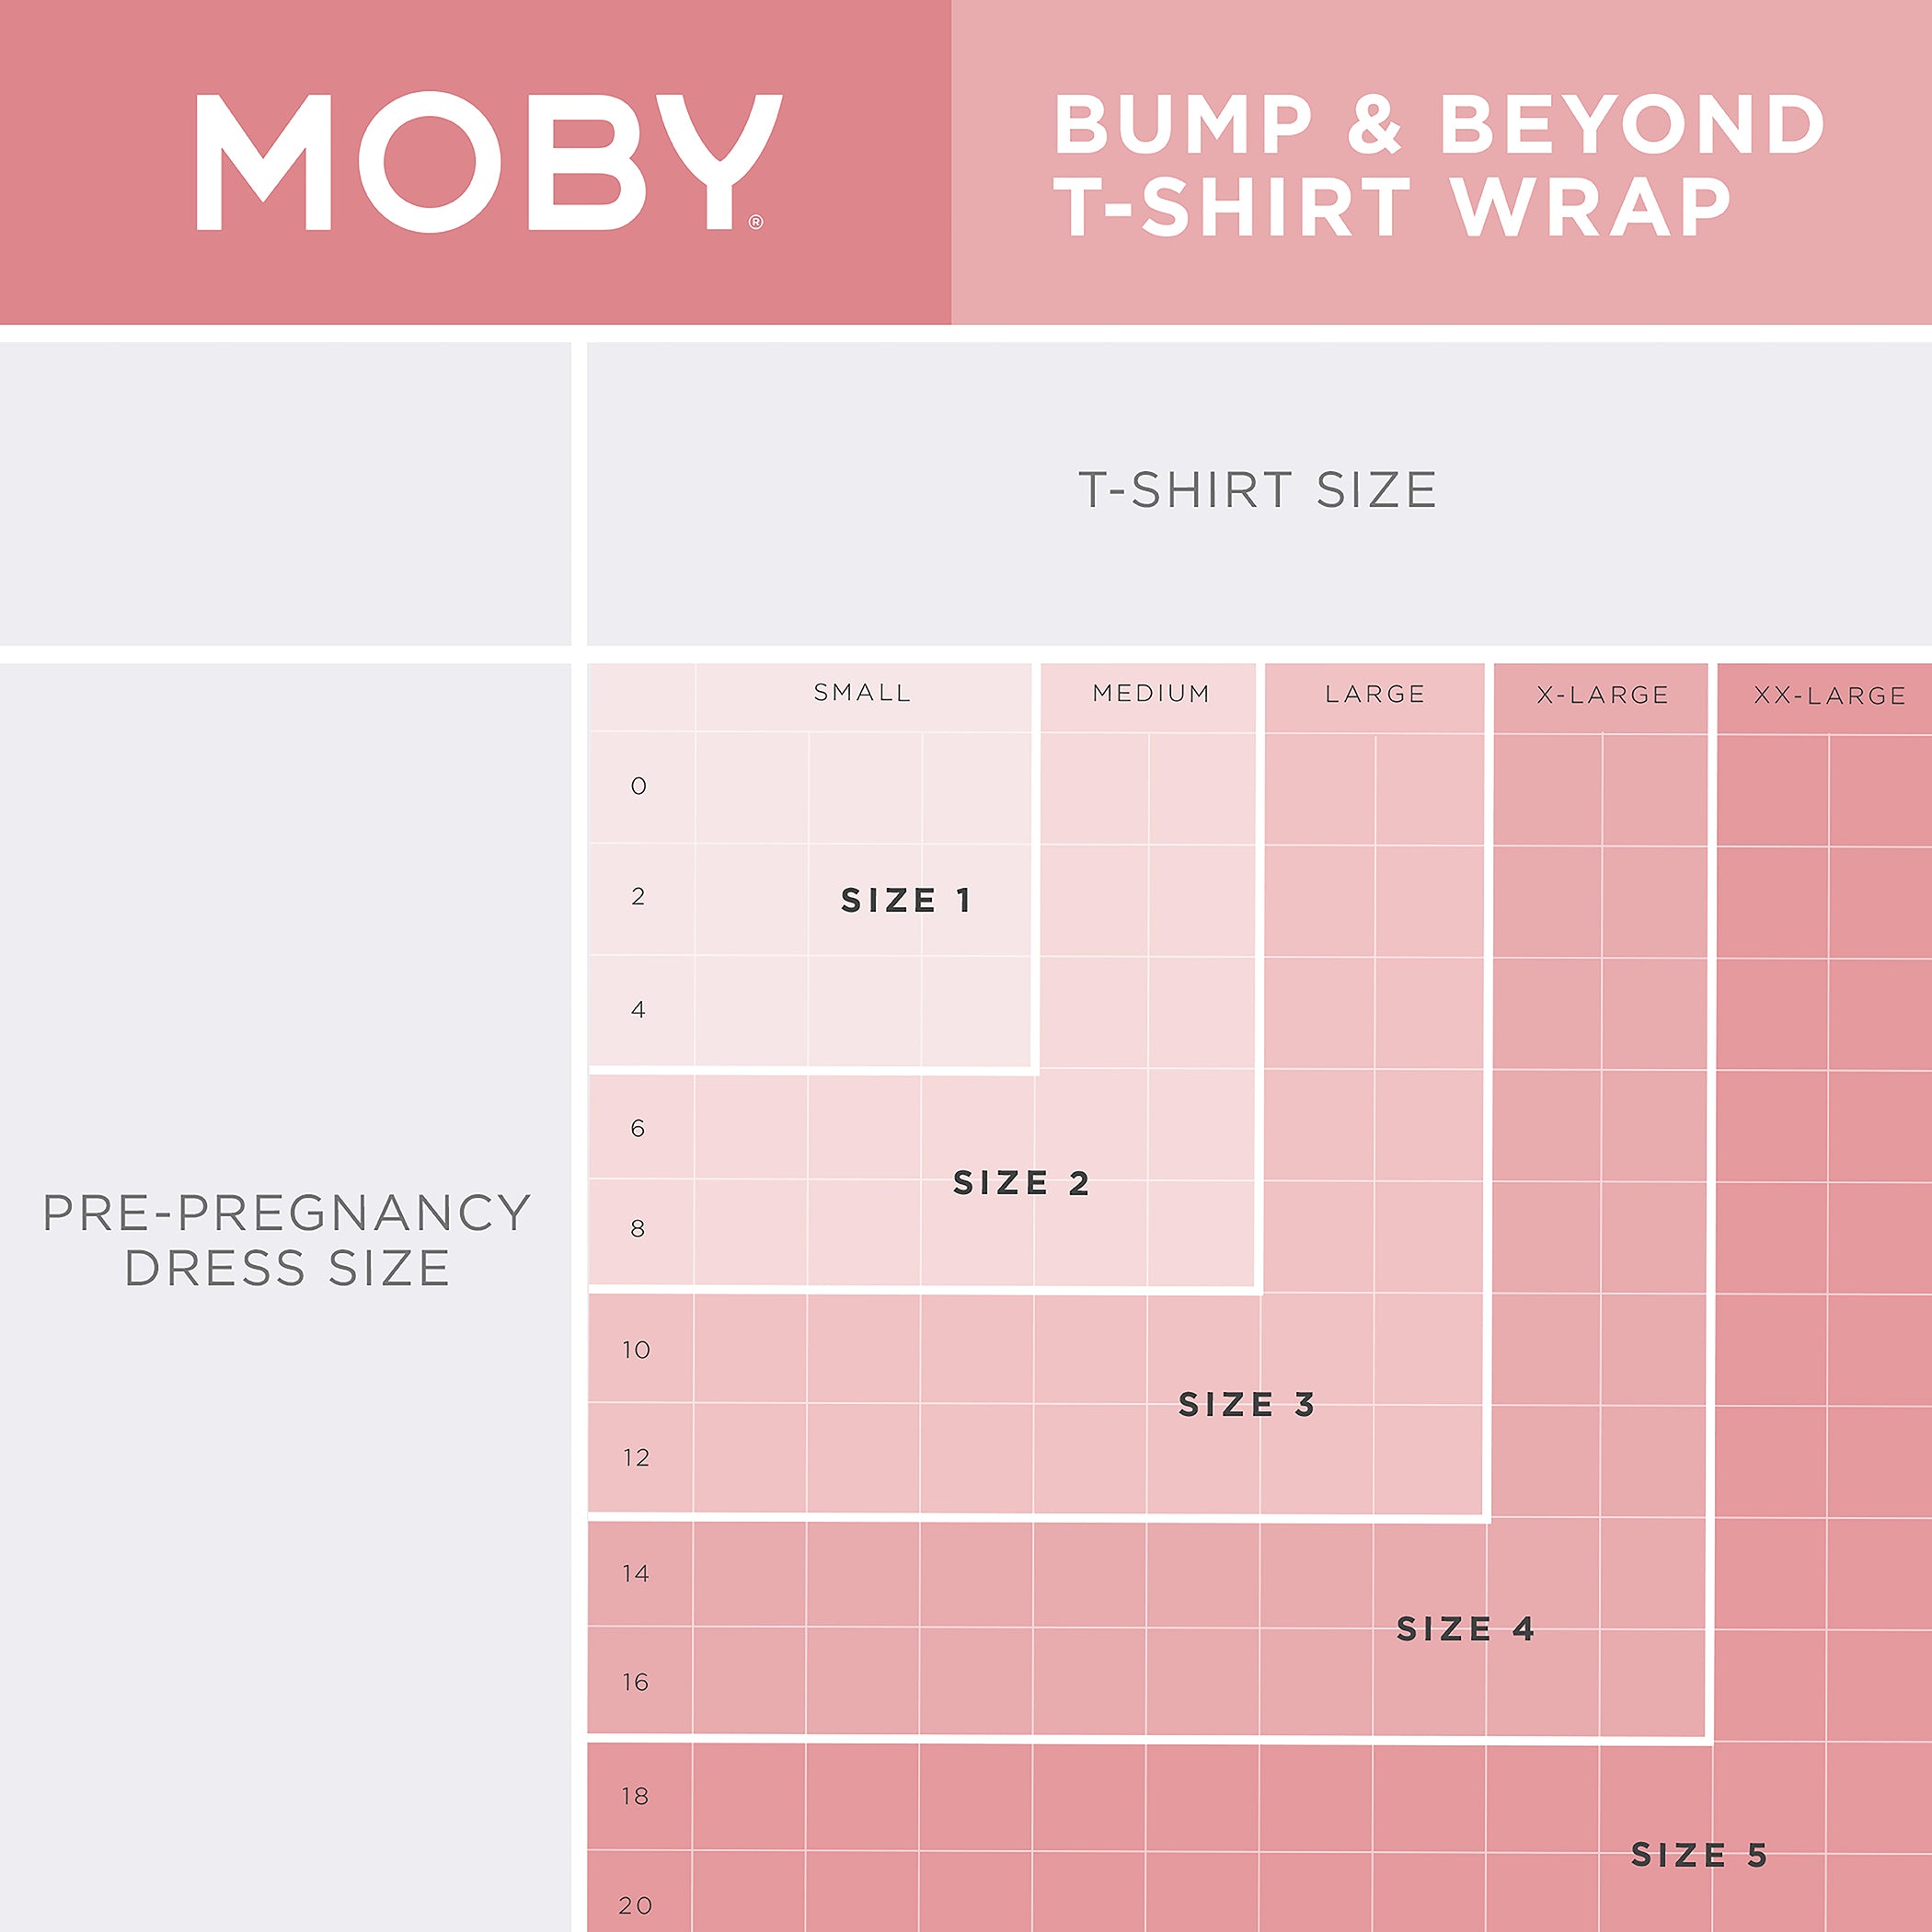 bump and beyond t-shirt wrap size chart